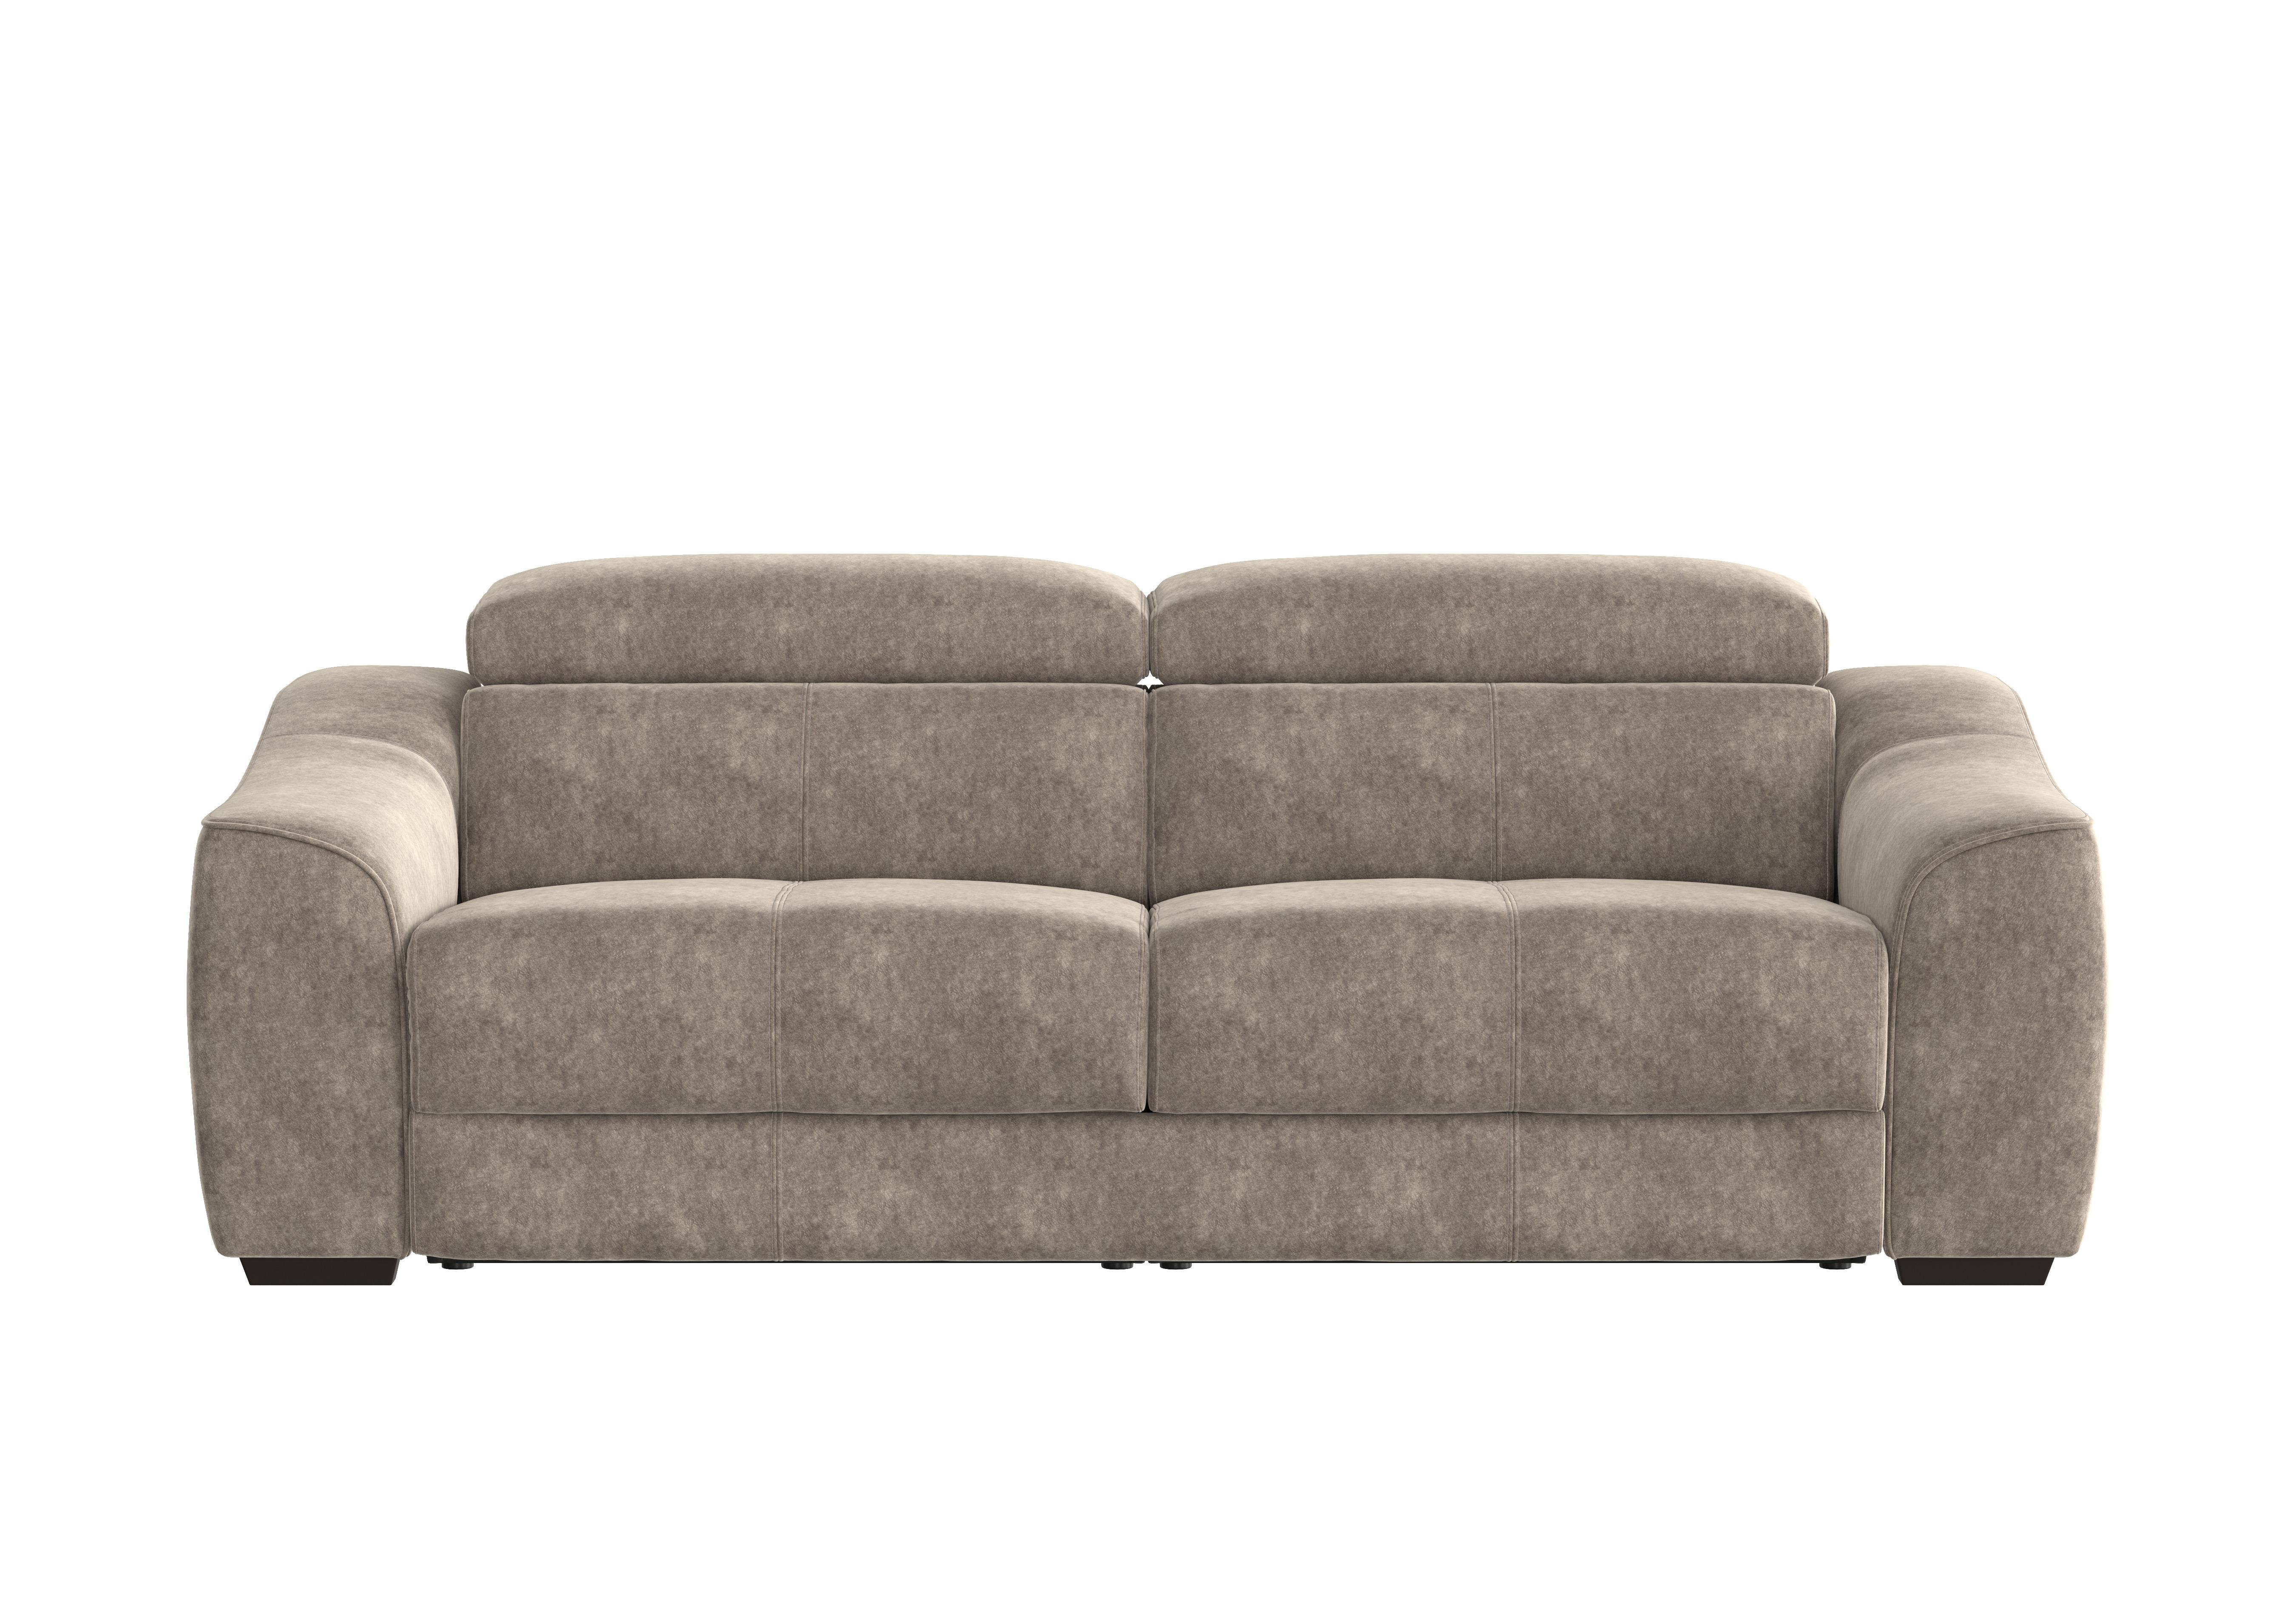 Elixir 3 Seater Fabric Sofa Bed in Bfa-Bnn-R29 Fv1 Mink on Furniture Village